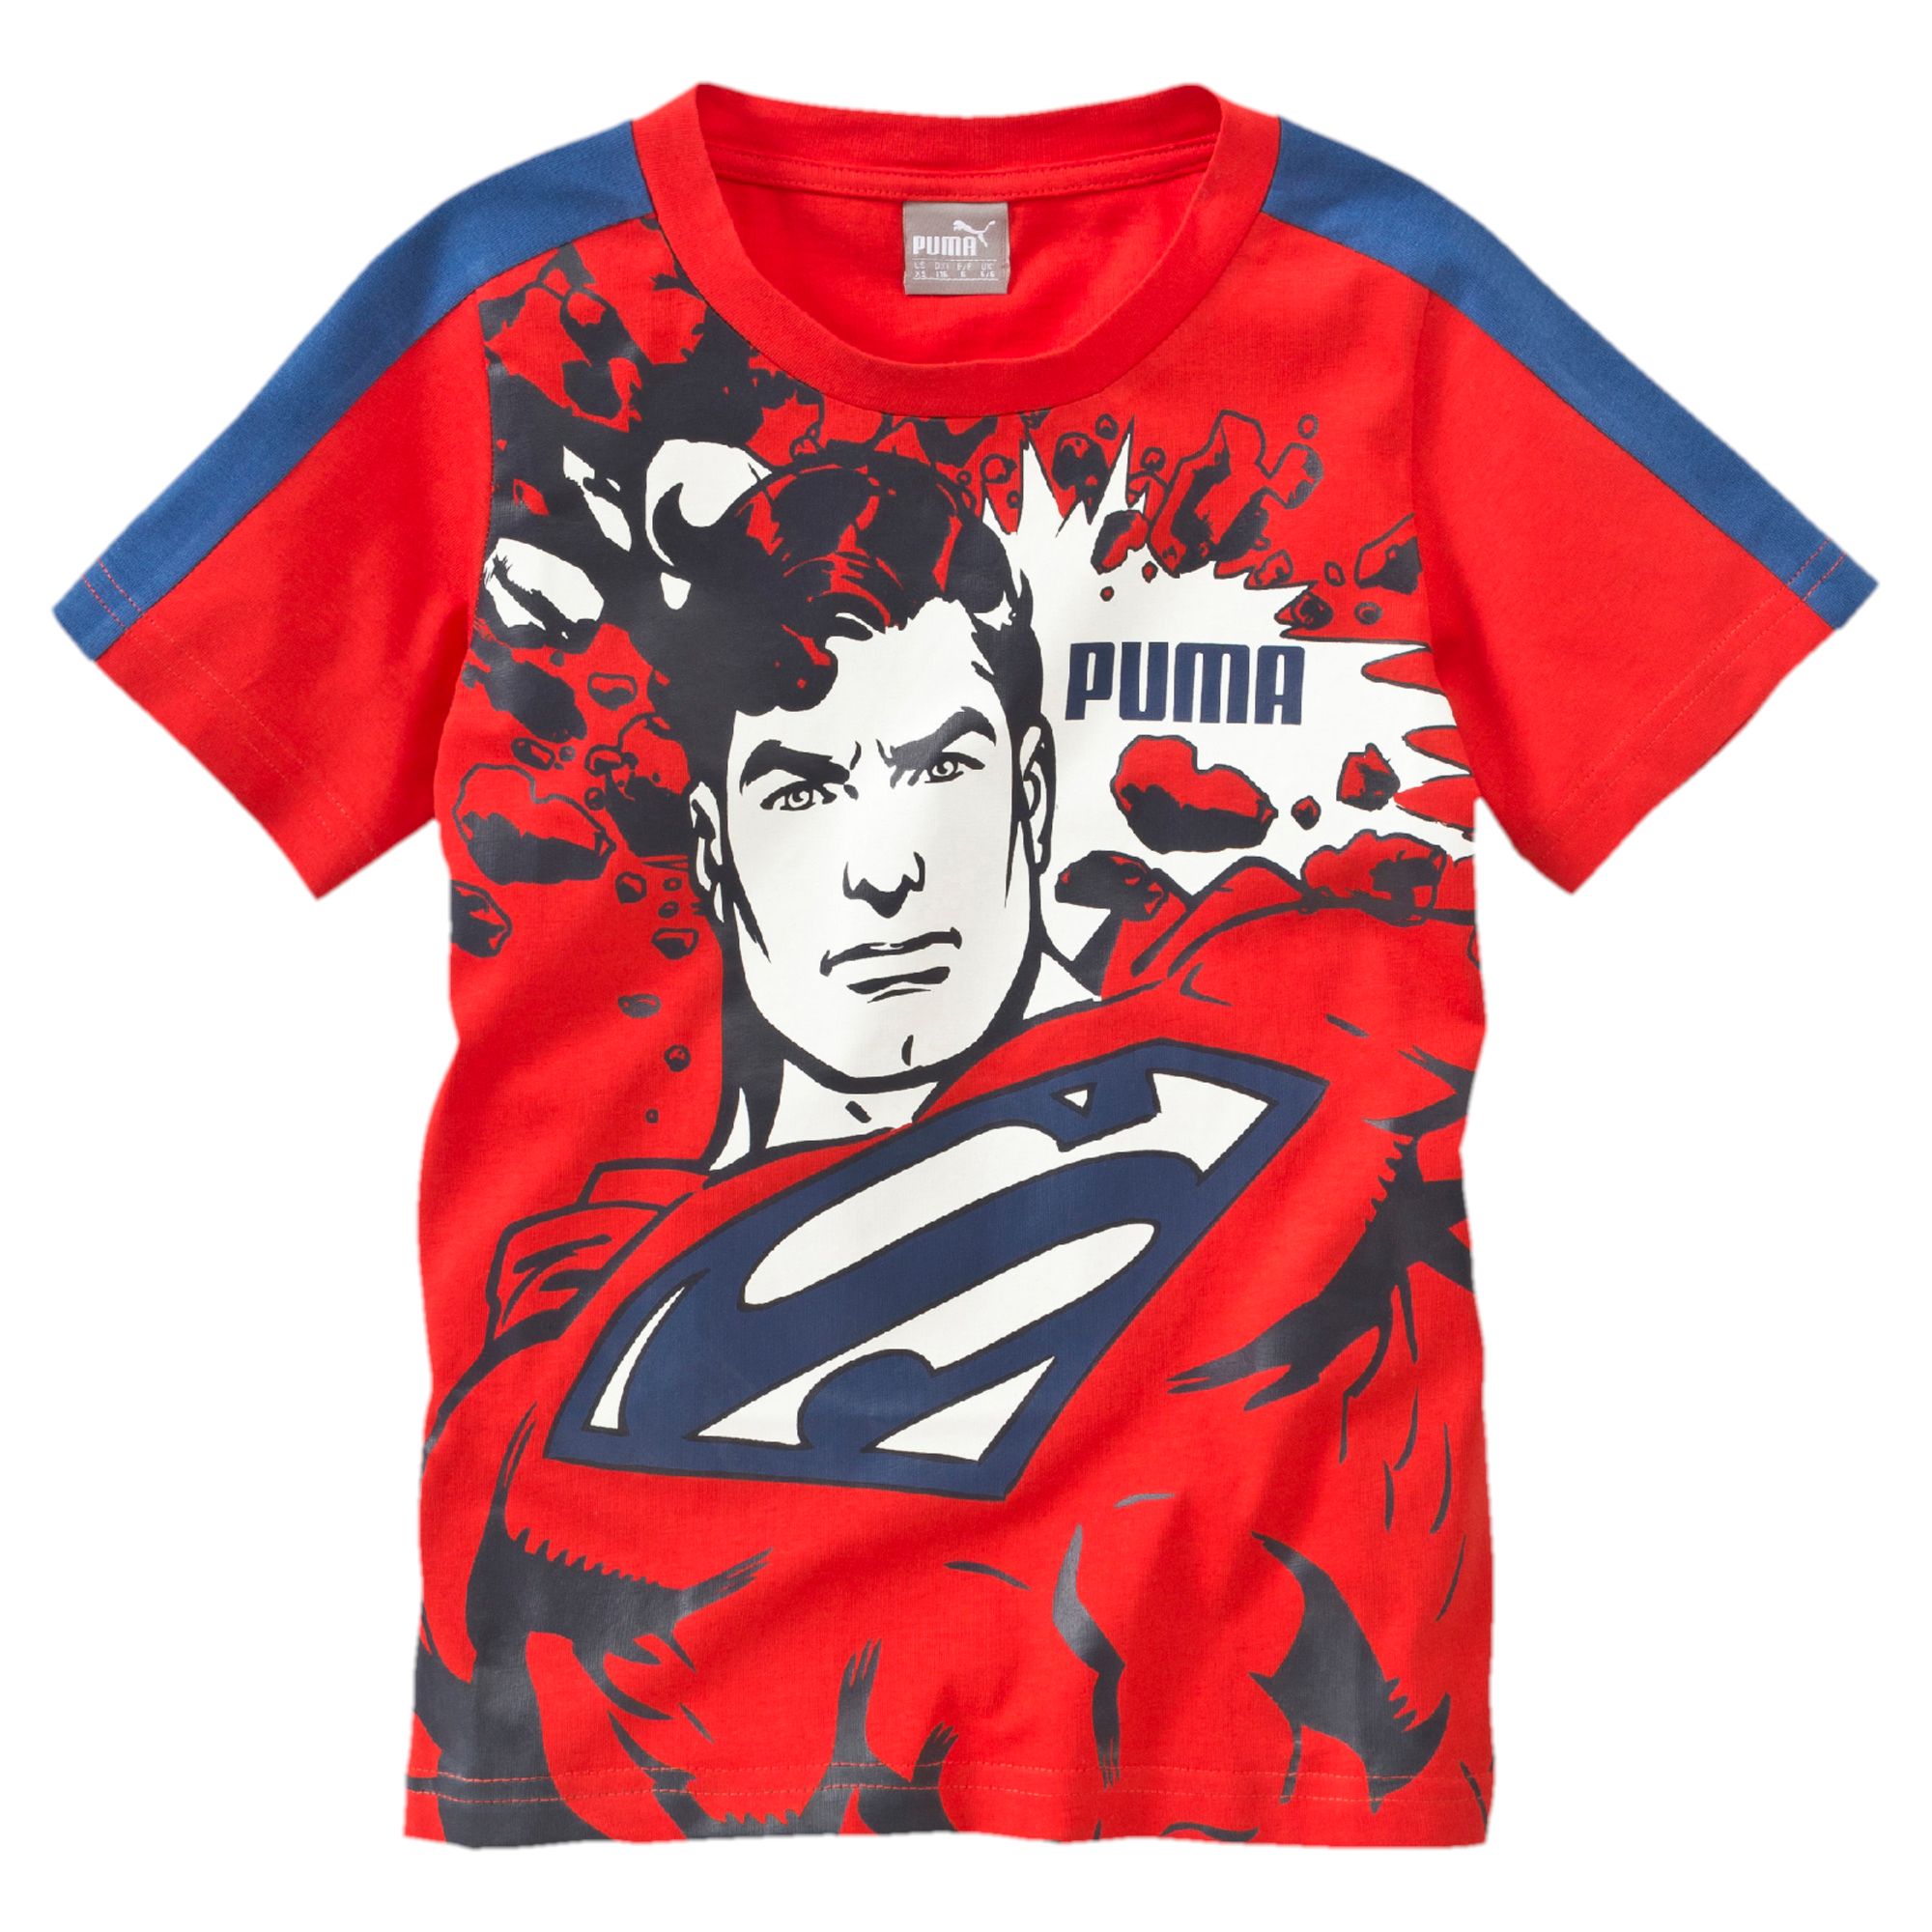 PUMA Superman™ Boys’ T-Shirt Kids Tee Boys New | eBay